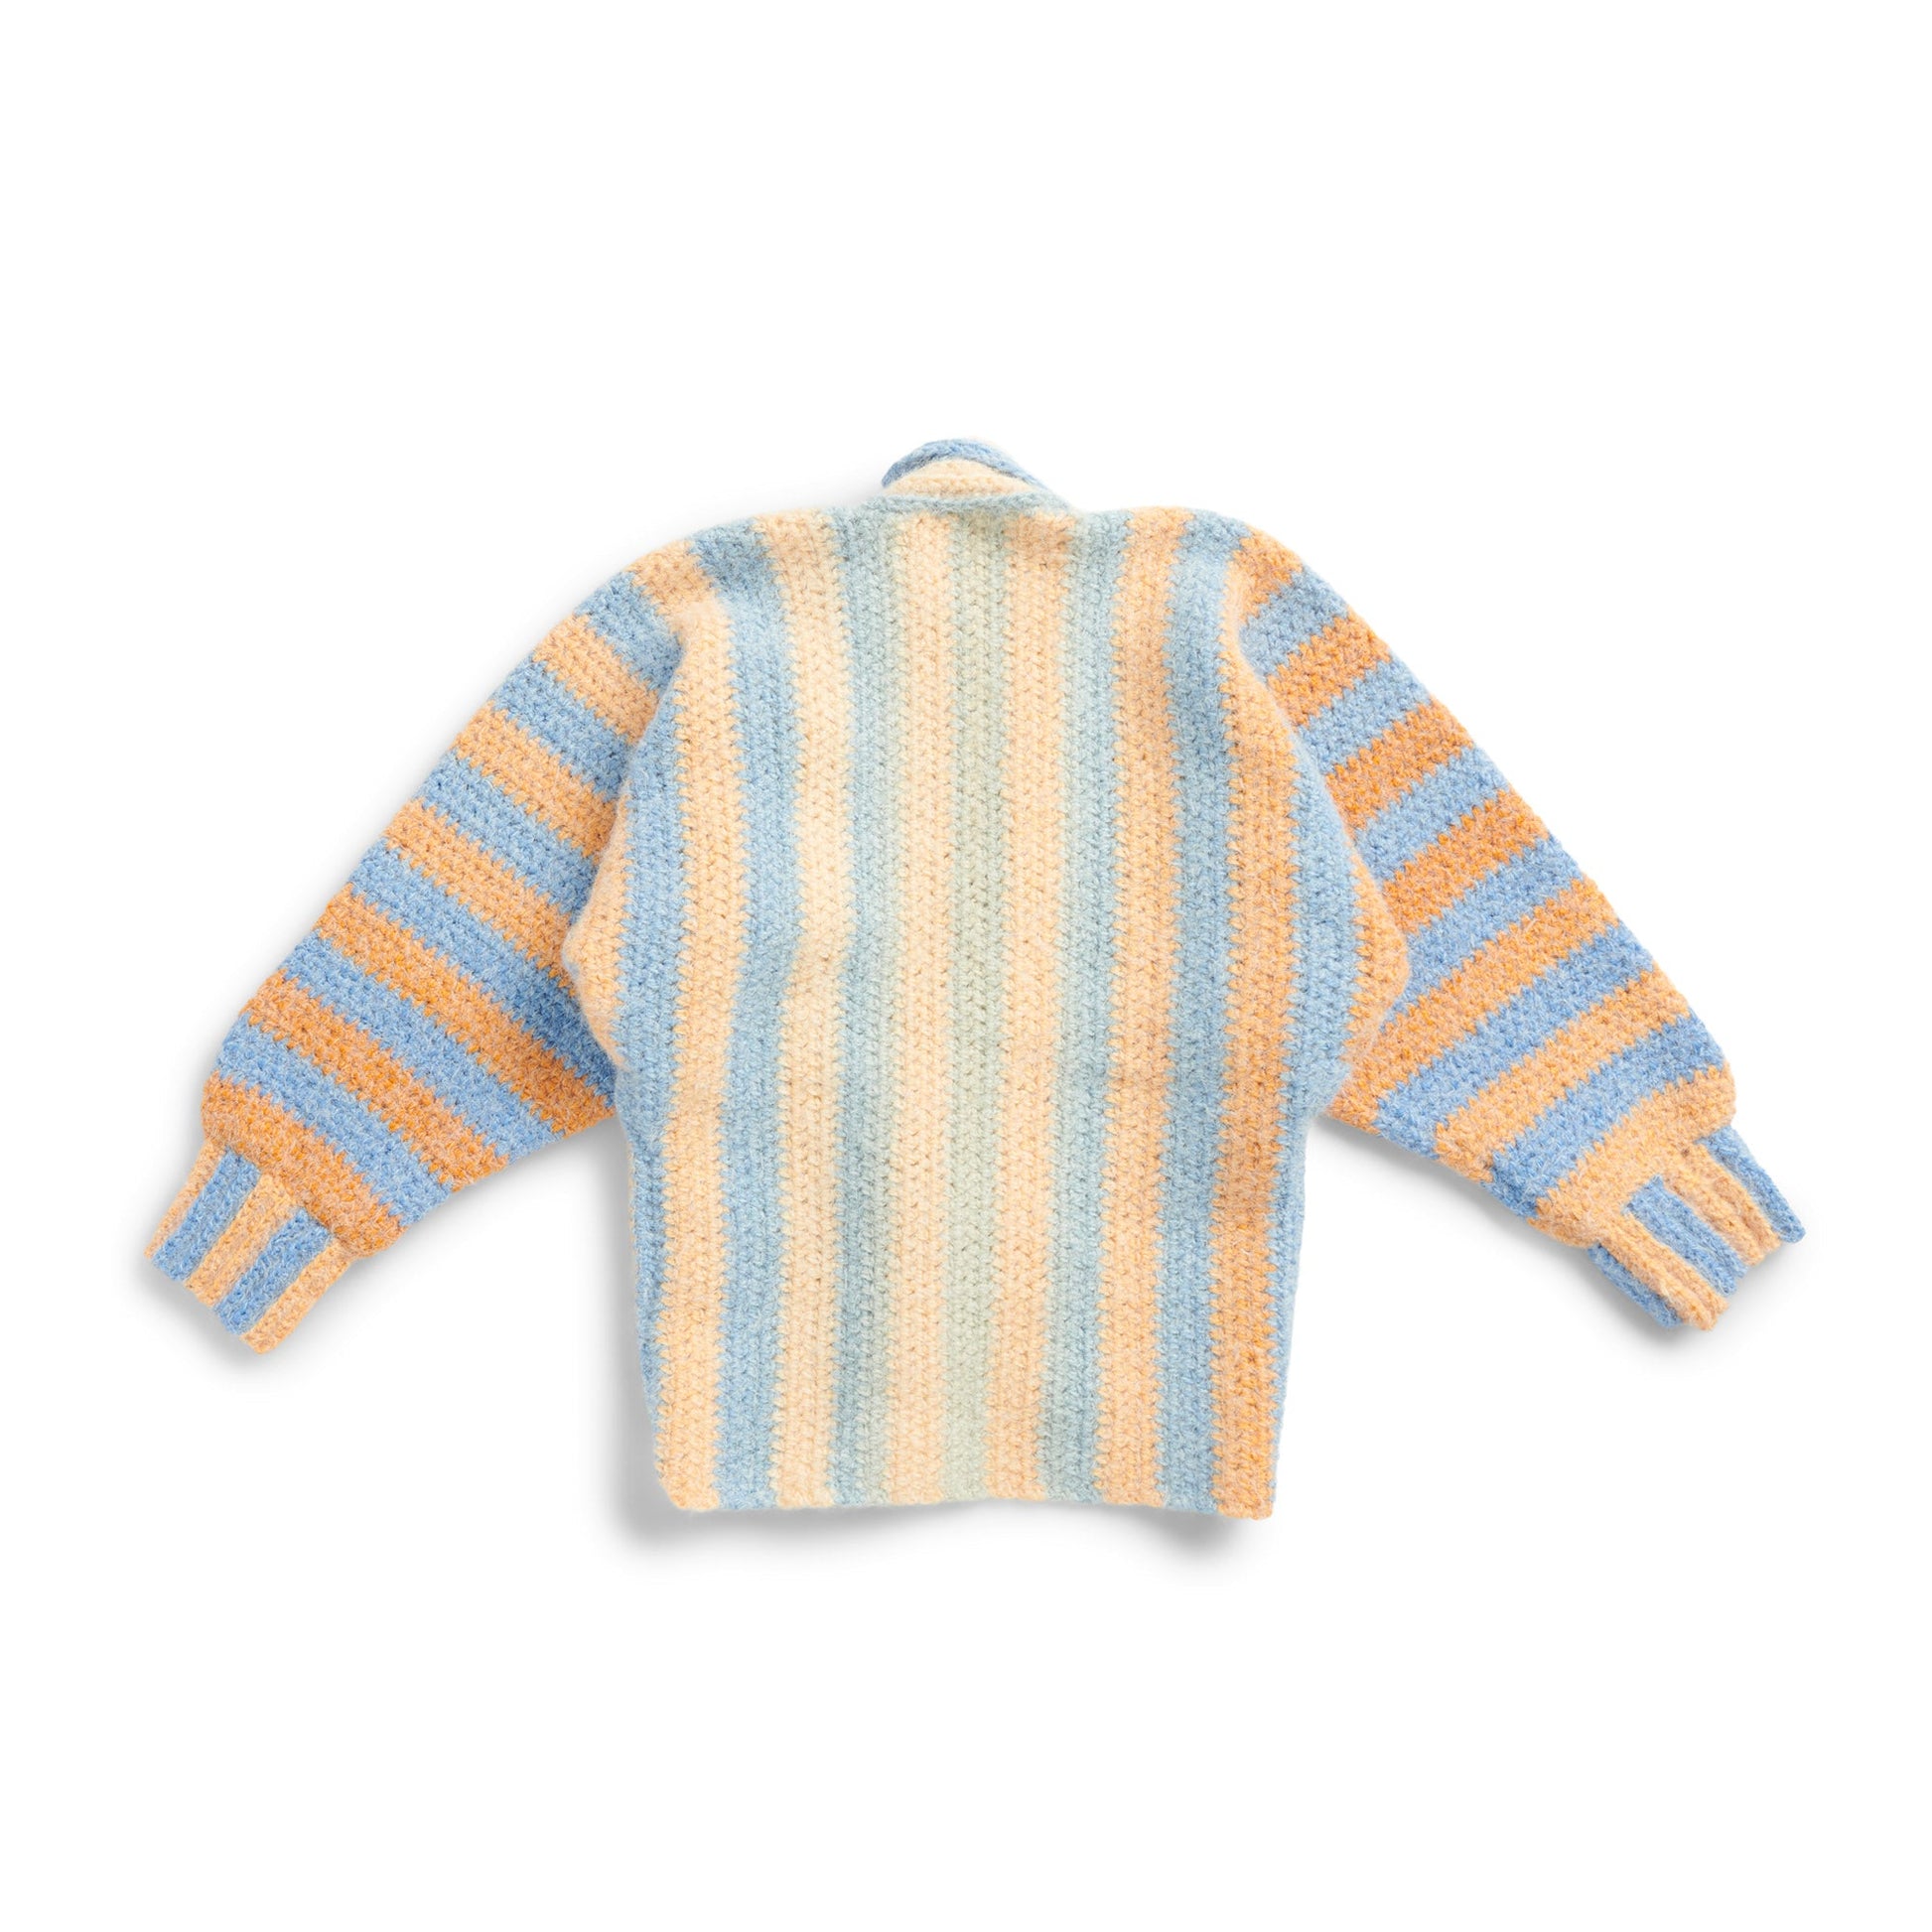 Free Caron Vertical Stripes Crochet Cardigan Pattern